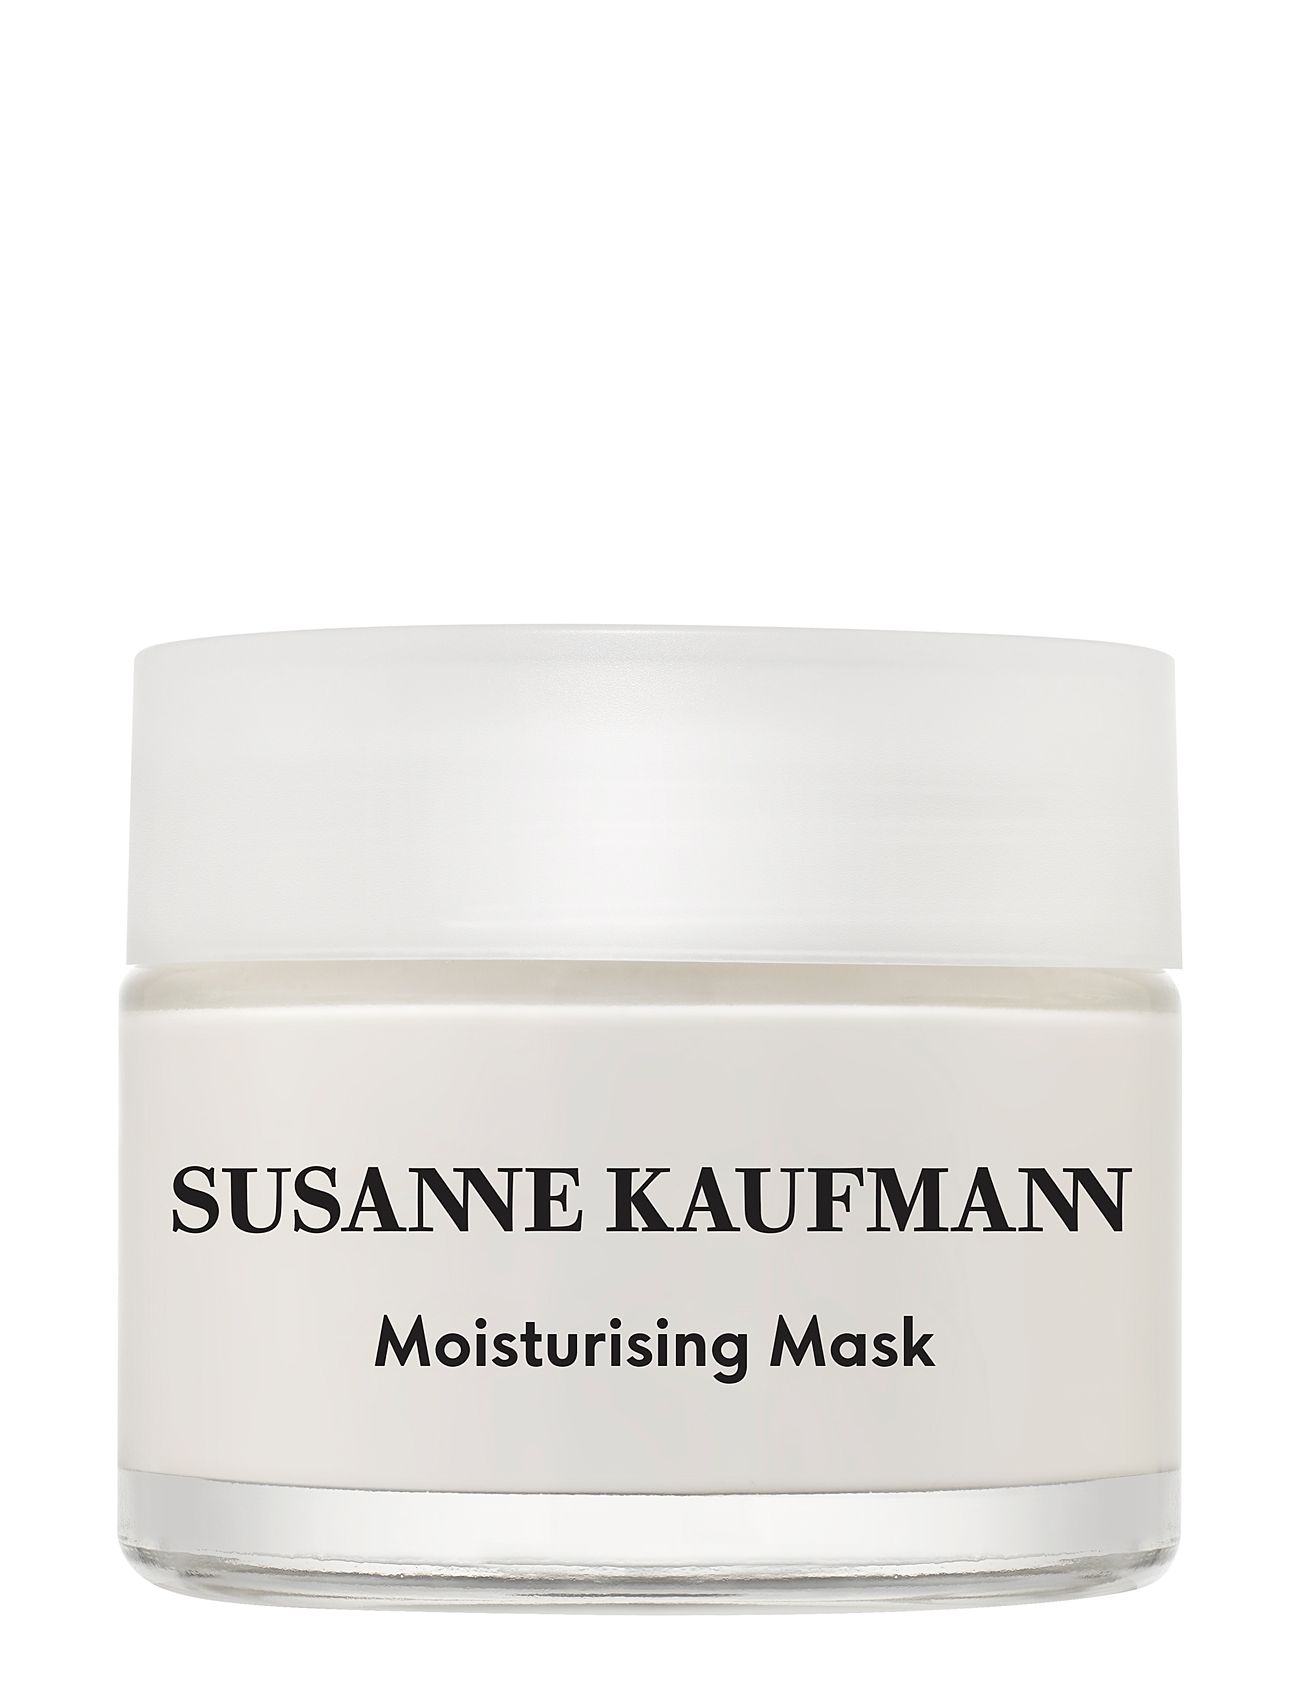 Moisturising Mask 50 Ml Beauty Women Skin Care Face Face Masks Moisturizing Mask Nude Susanne Kaufman